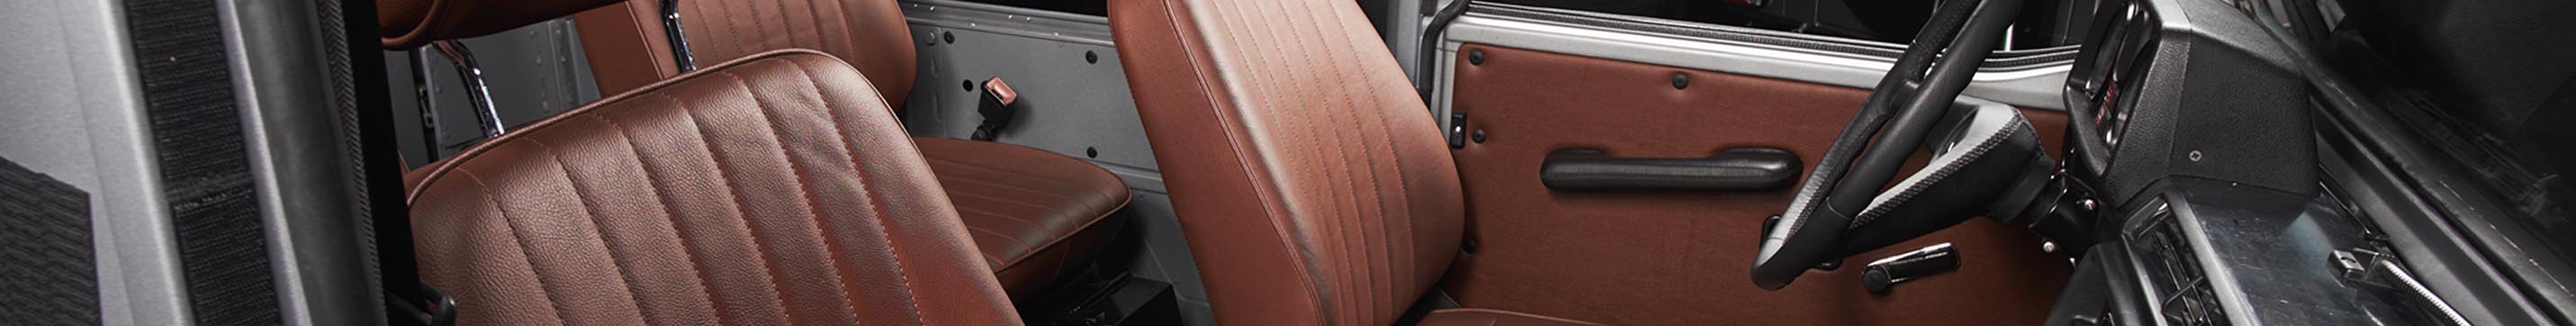 Mercedes G-Class Interior Custom Material Options image